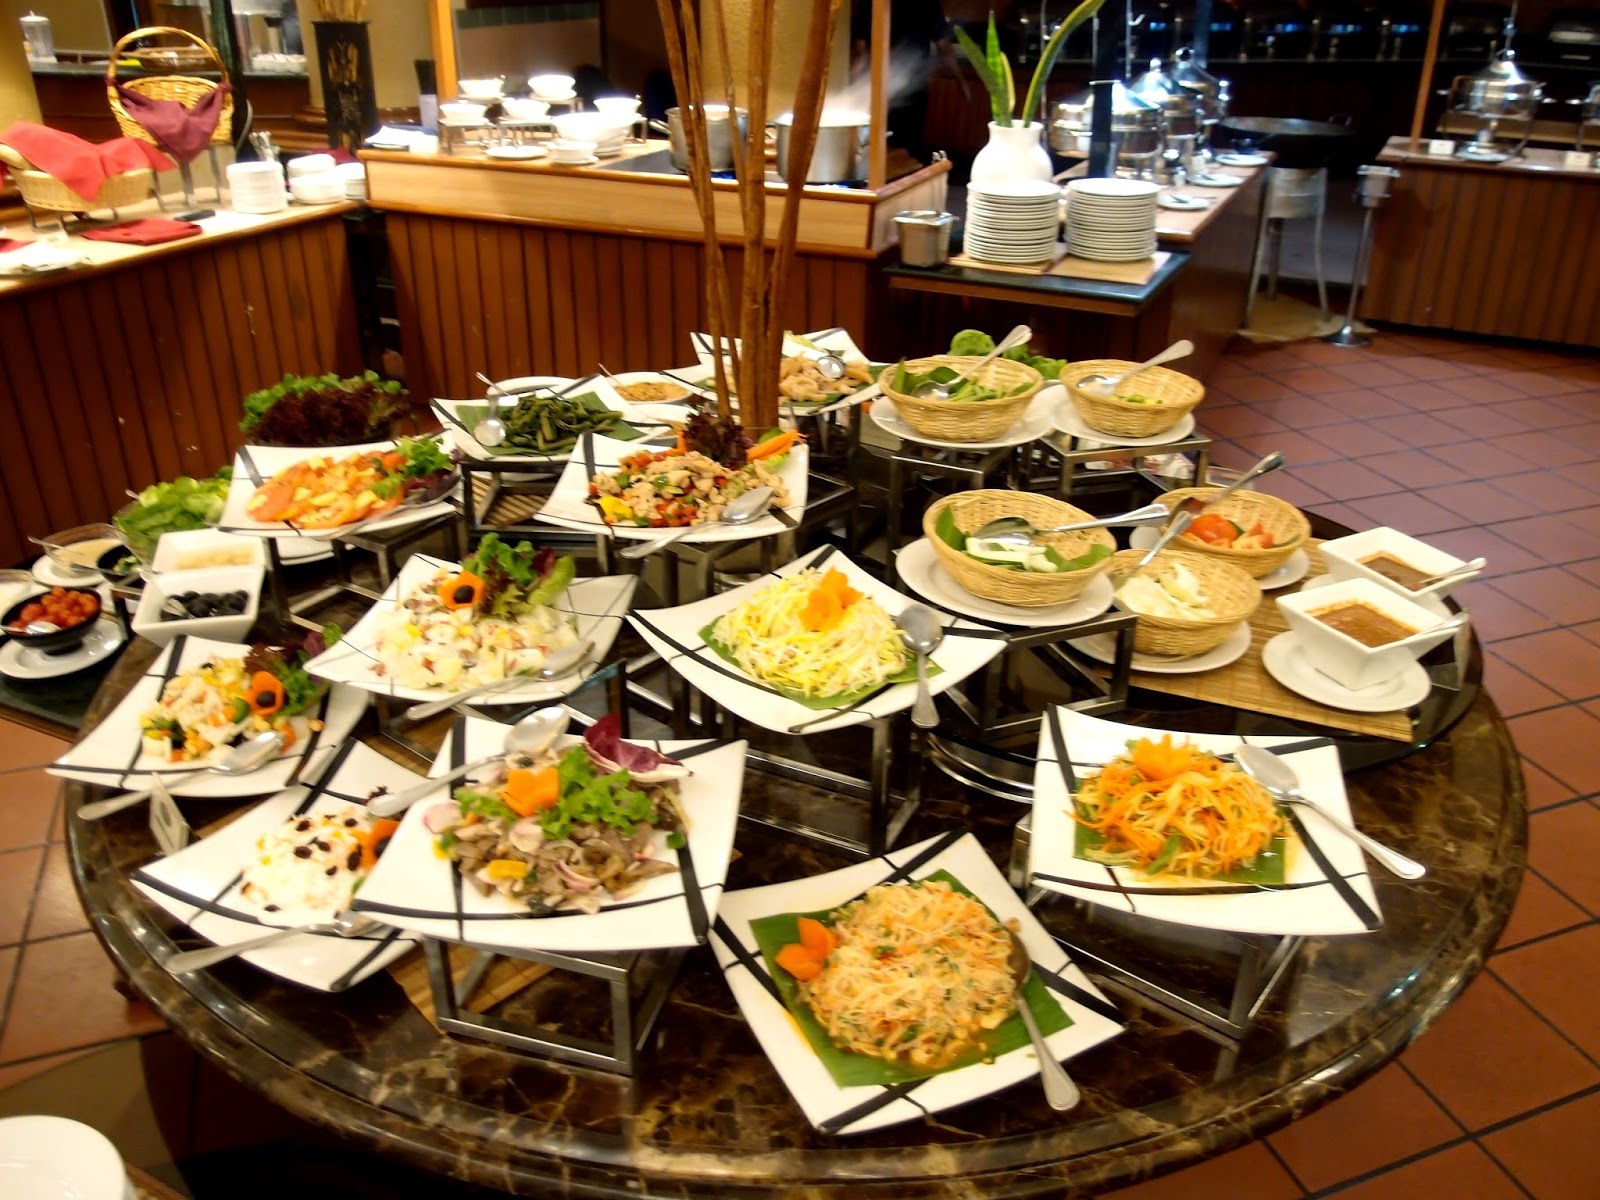 Follow Me To Eat La - Malaysian Food Blog: Palm Garden Hotel - Thai Fest Buffet @ IOI Resort ...